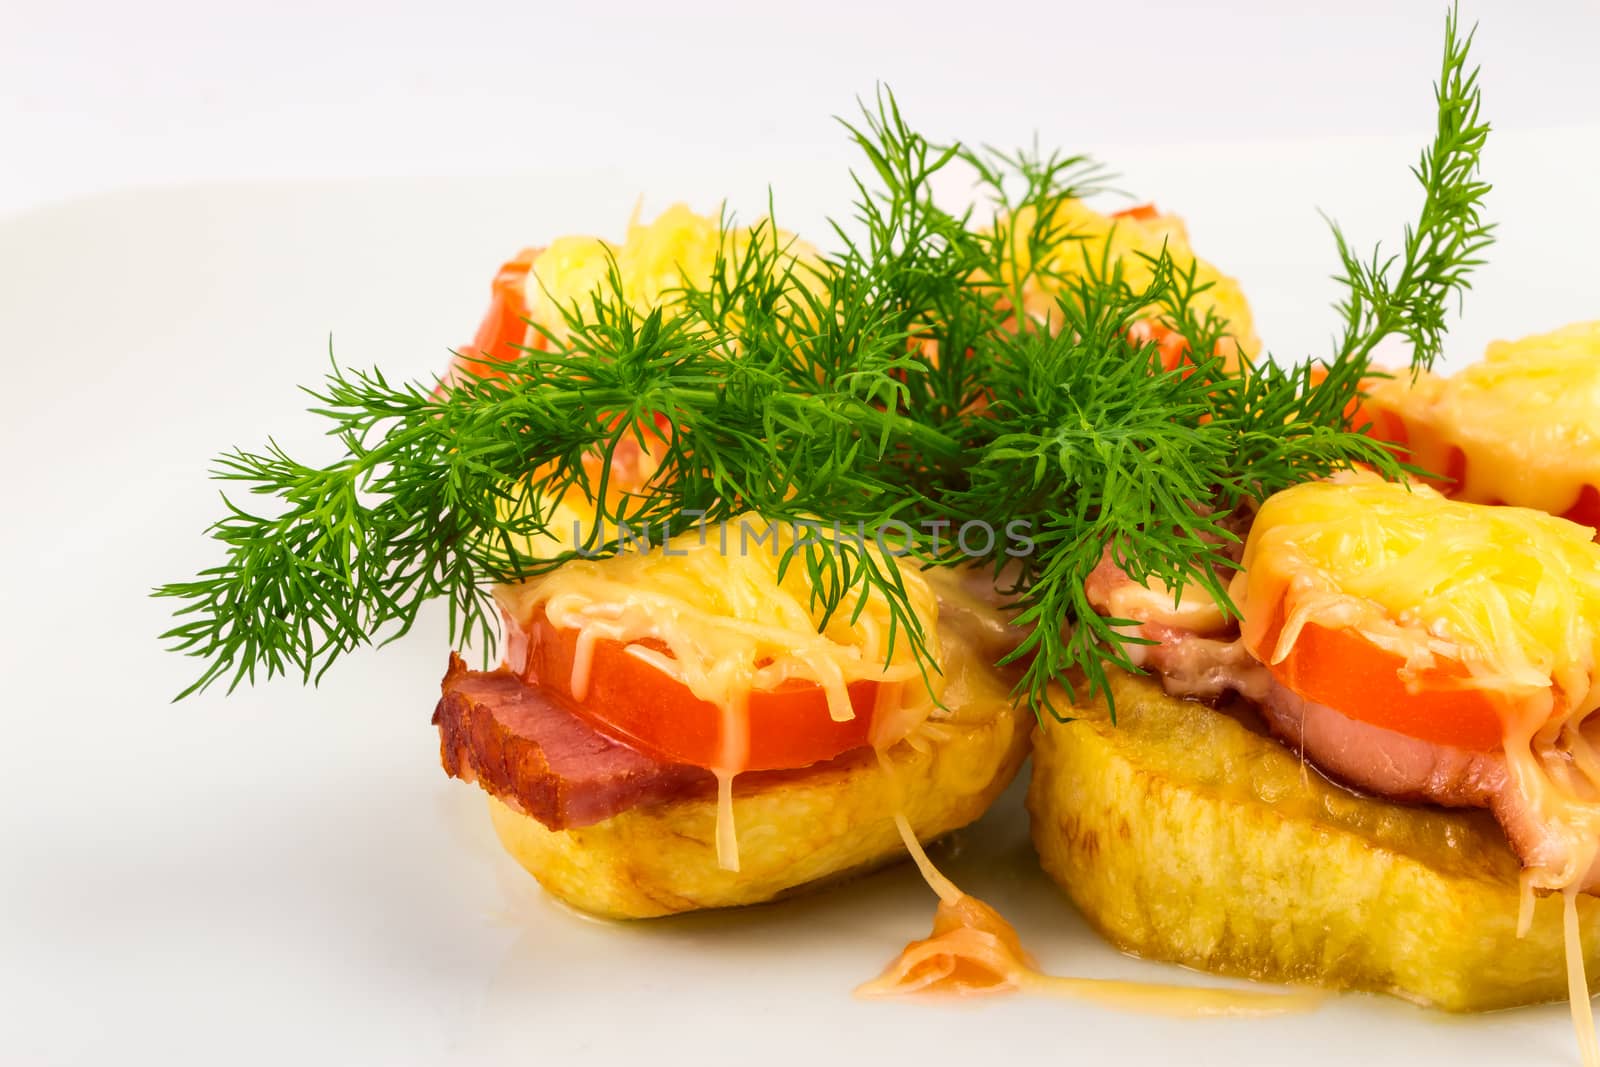 potatoes sandwiches by Pellinni